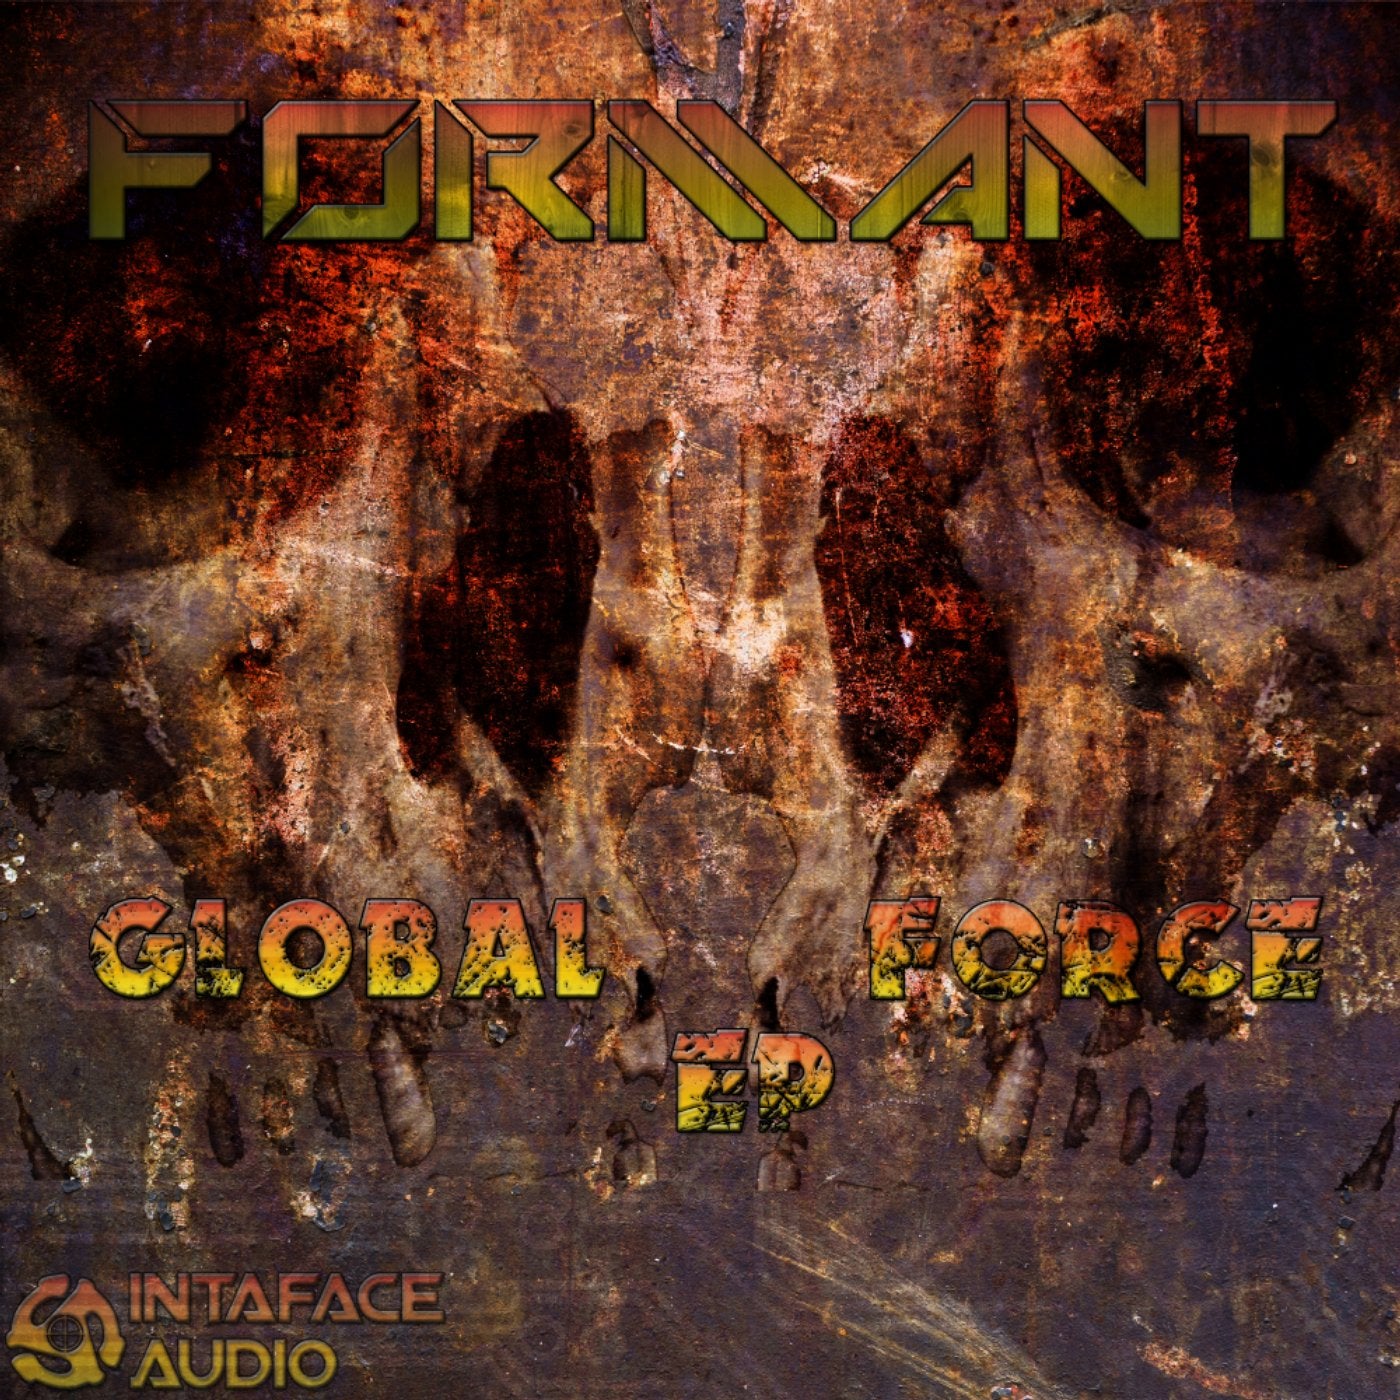 Global Force EP